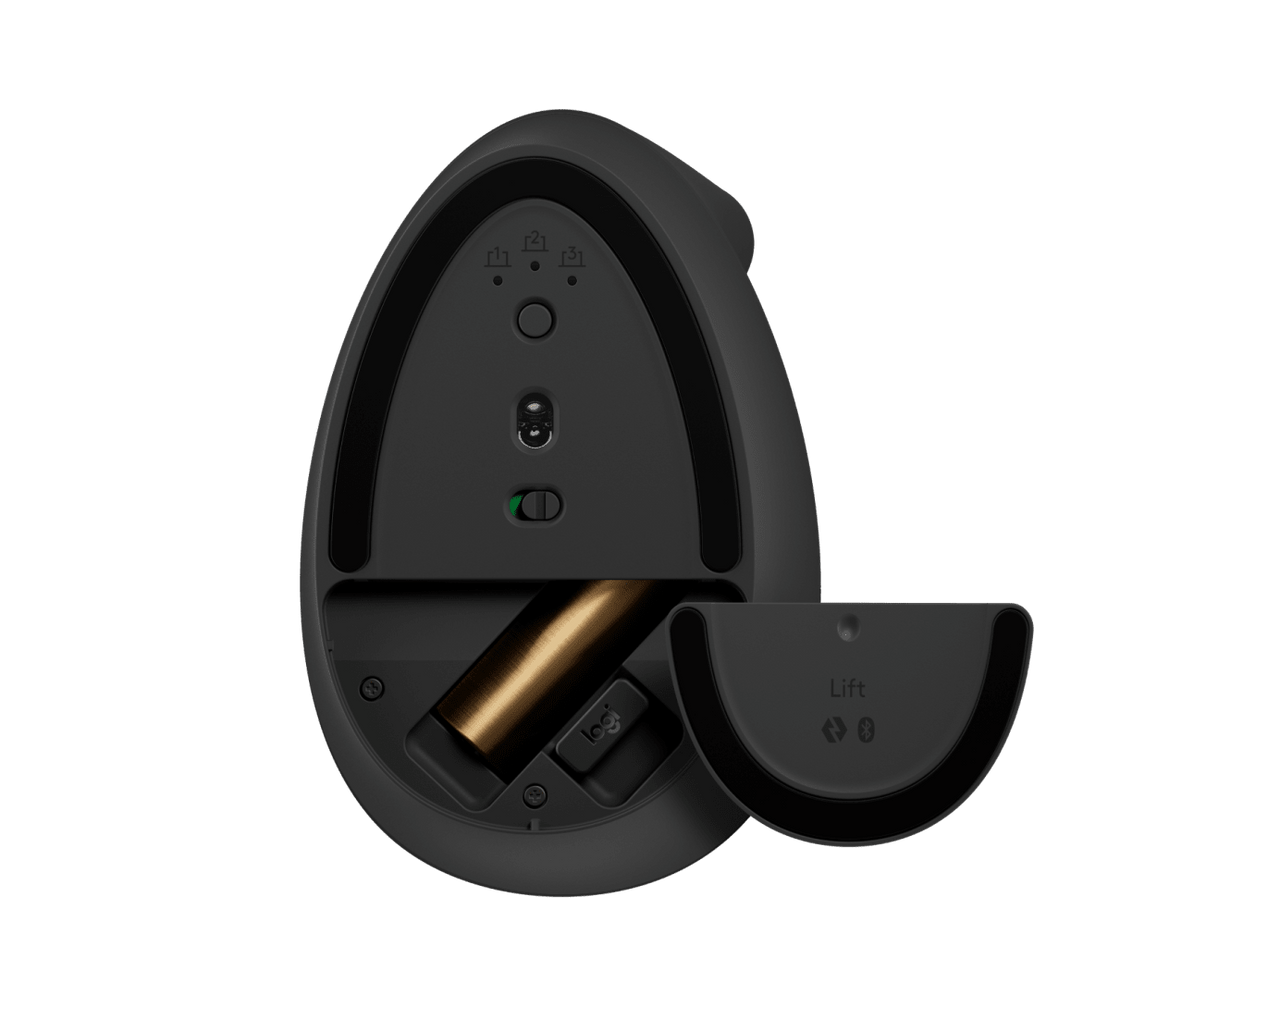 Logitech Lift Left Wireless Ergonomic Mouse Black